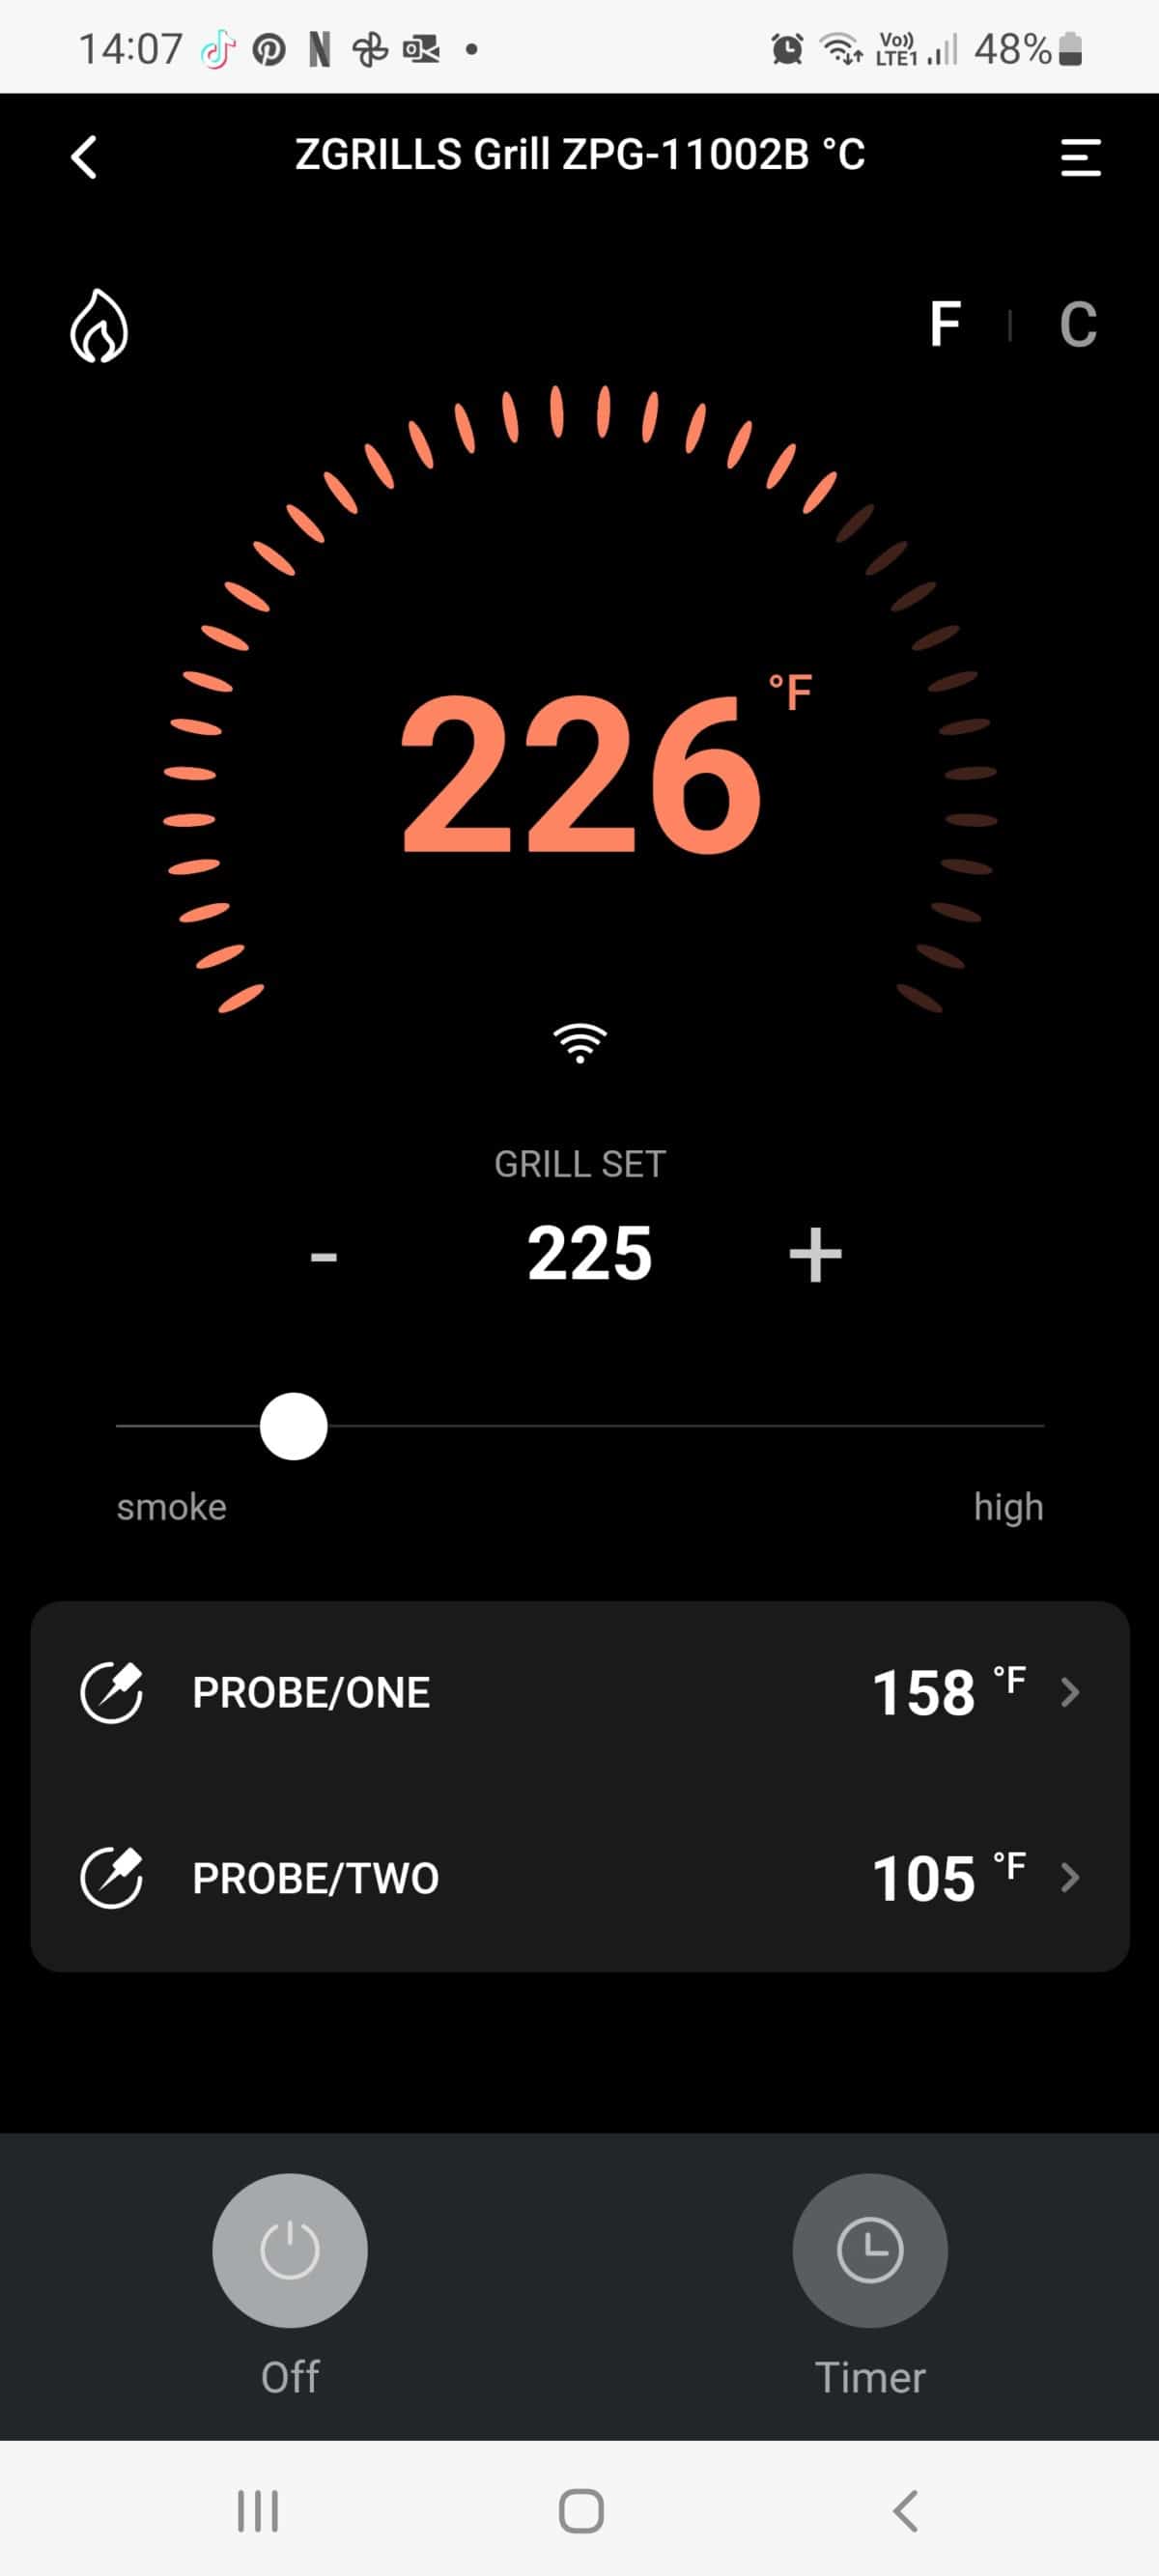 z grills smartphone app screenshot showing the grills various temperatures.